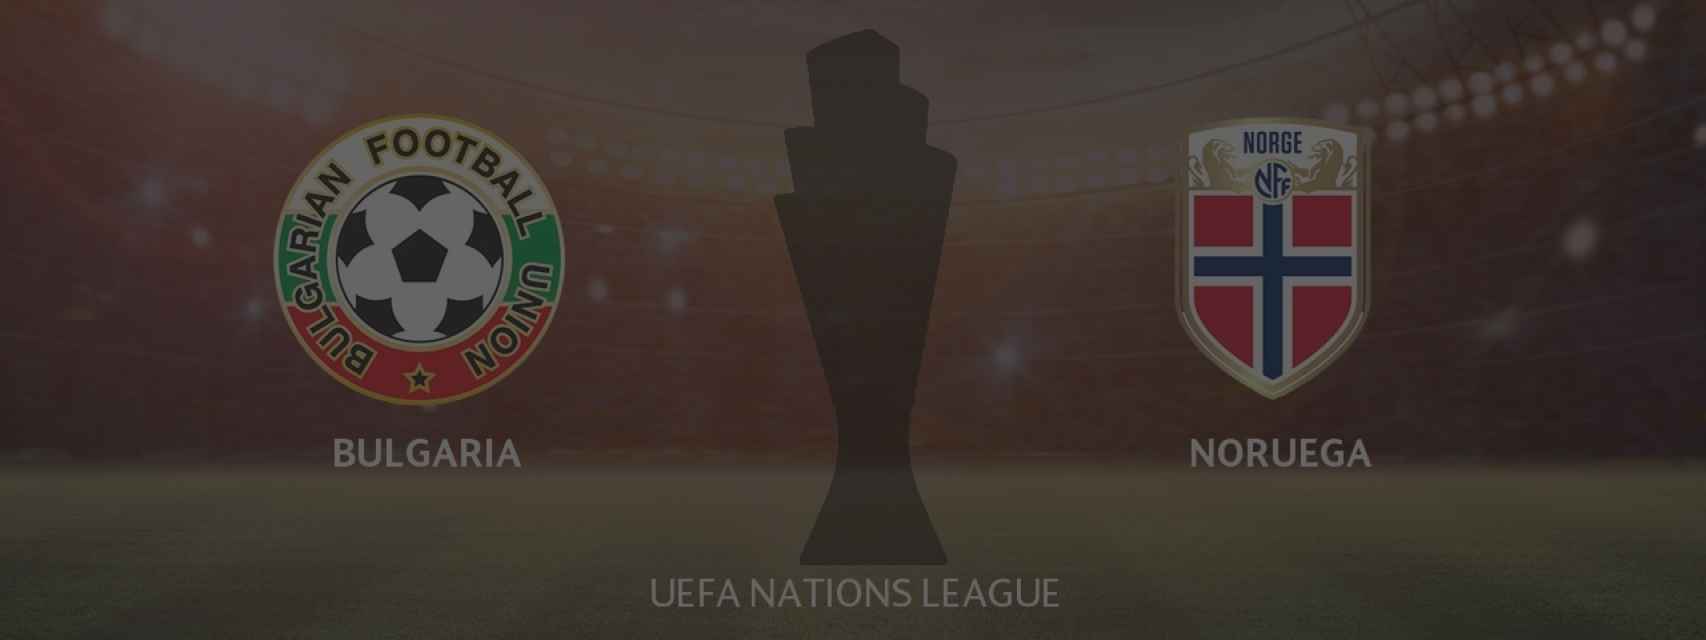 Bulgaria - Noruega, UEFA Nations League